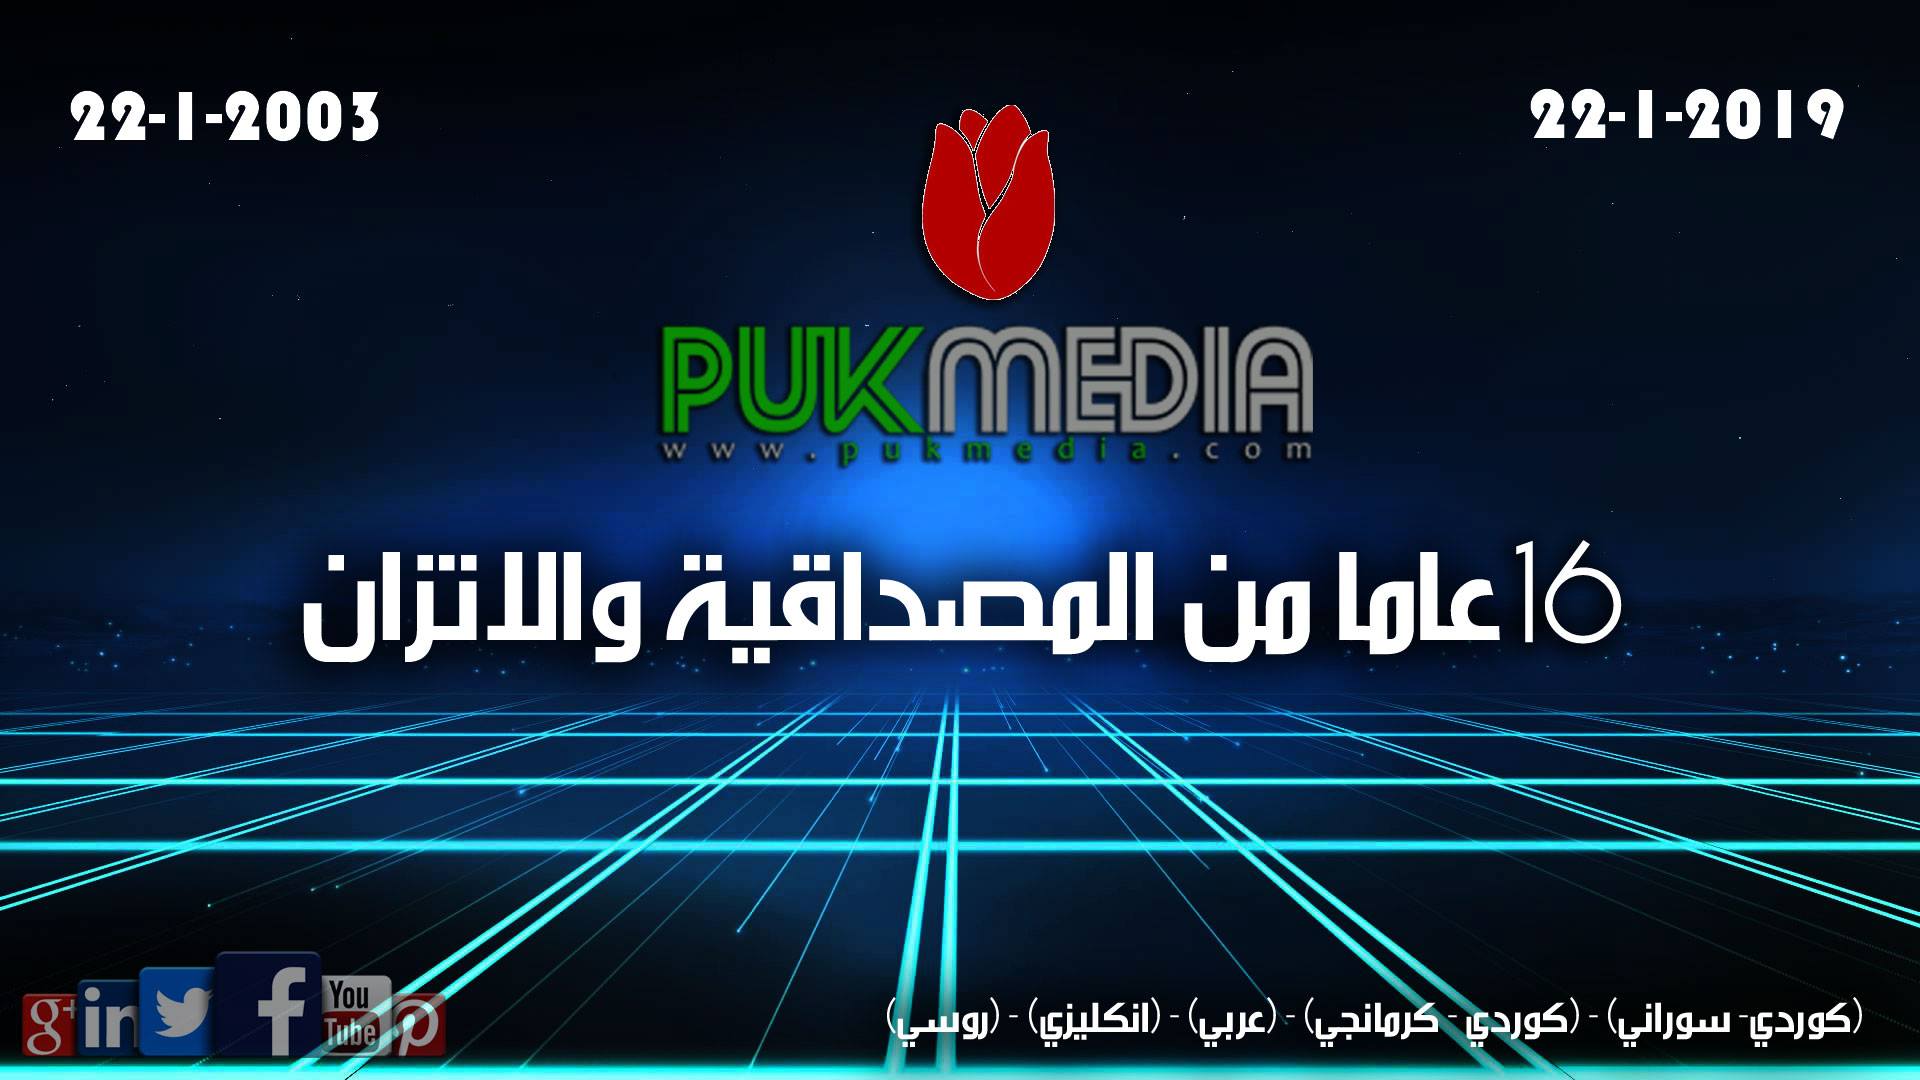 قوباد طالباني: PUKmedia مصدر مهم لنقل الحقائق